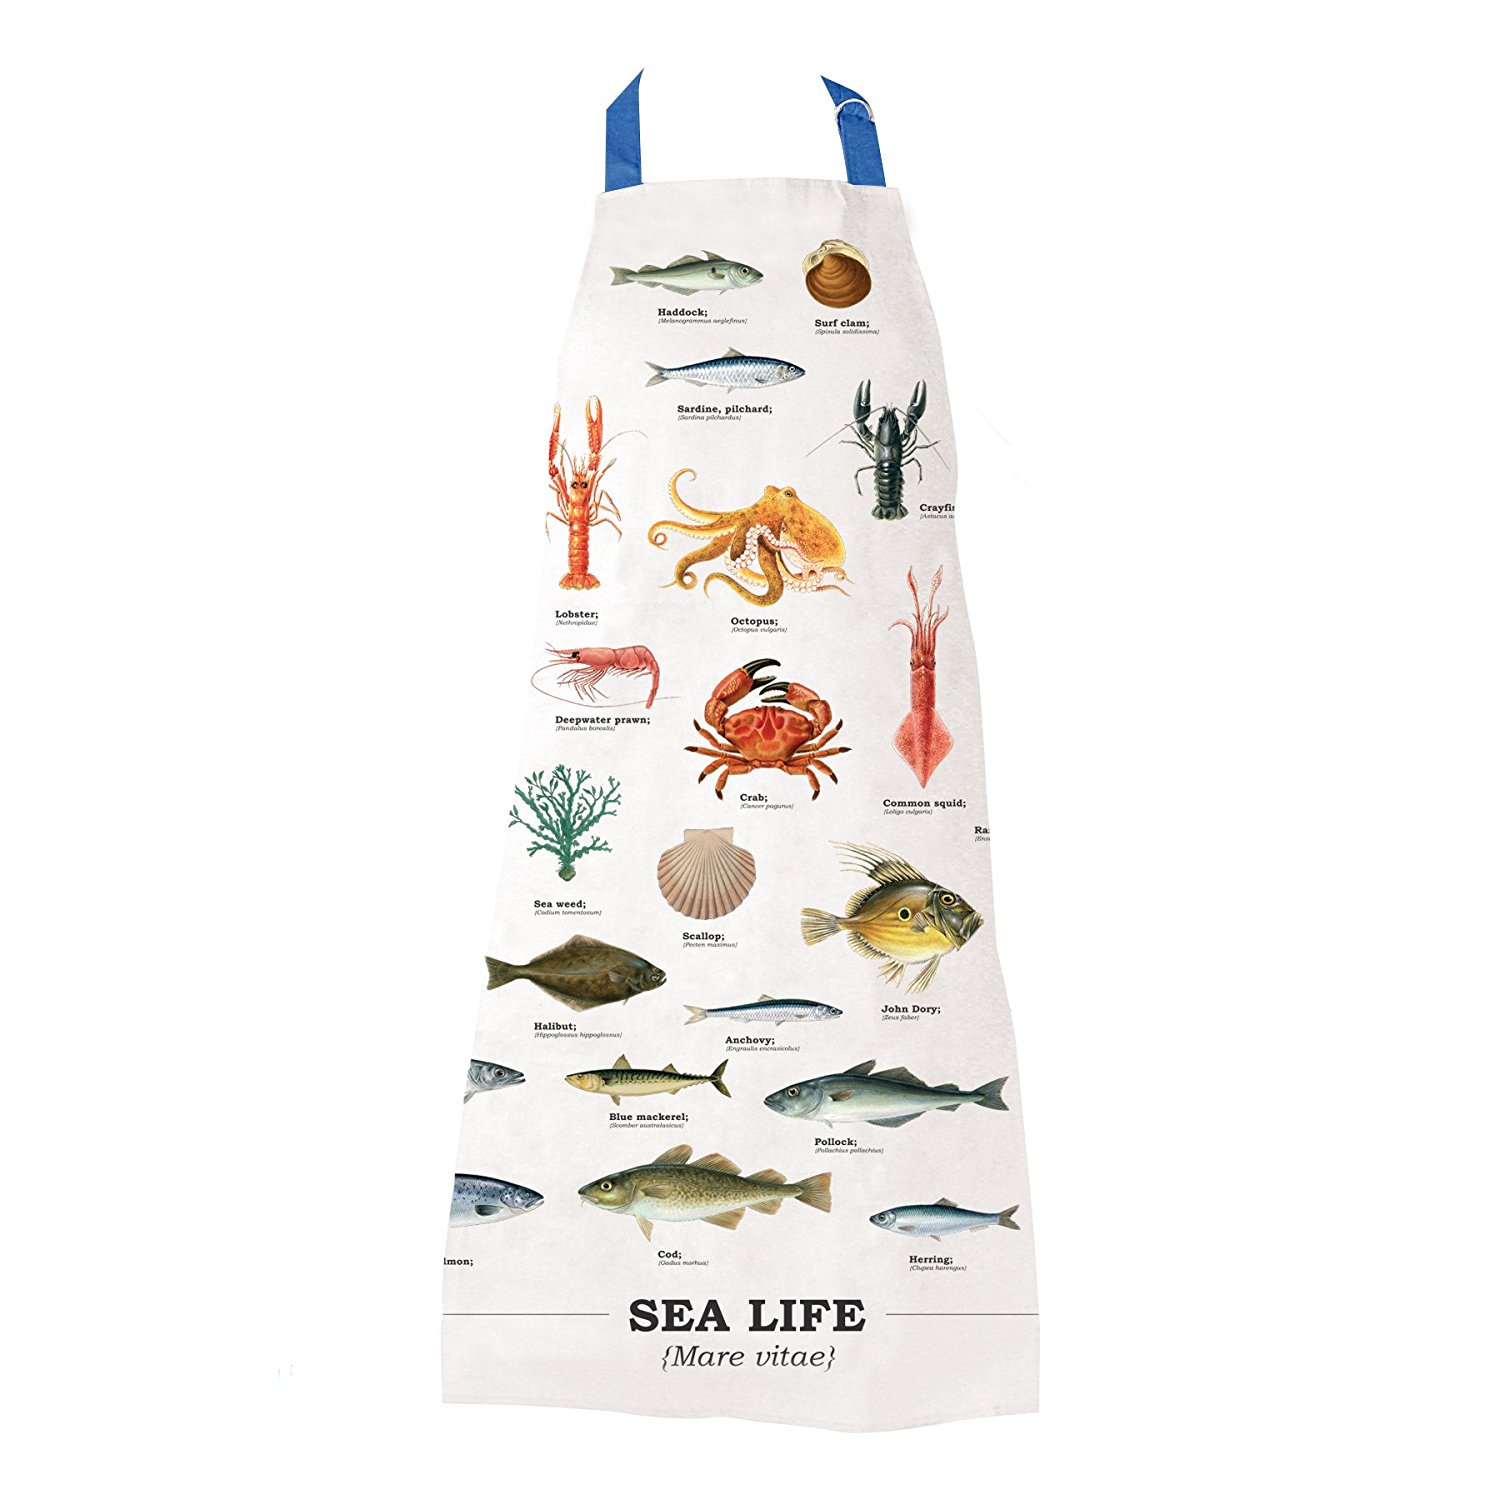 Sort pentru bucatarie - Sea Life | Gift Republic